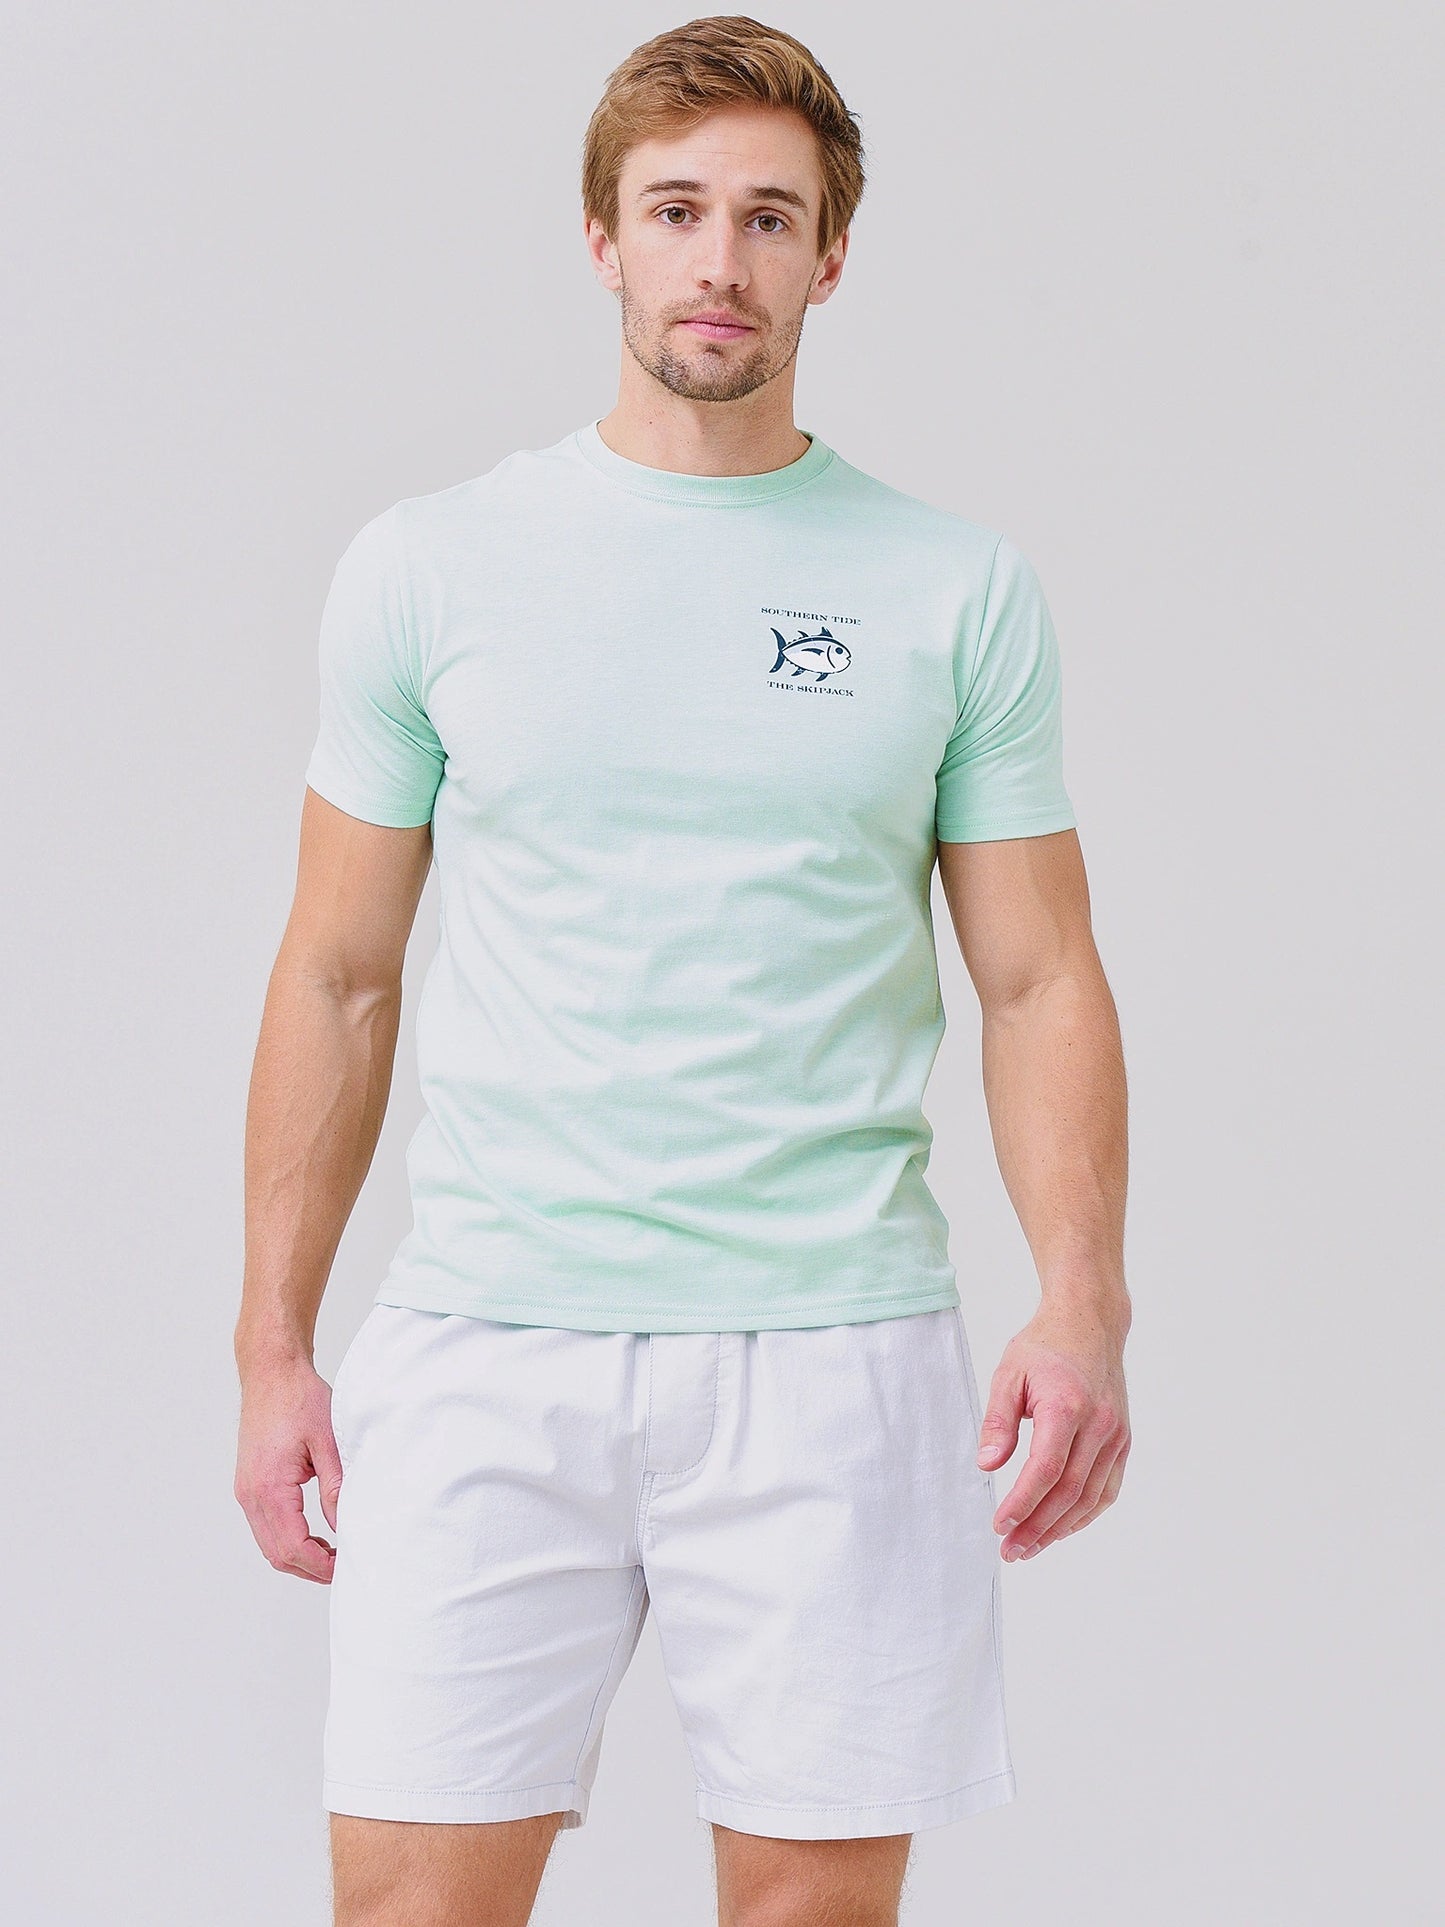 Southern Tide Men's Tailgate Pop-Up Heather T-Shirt